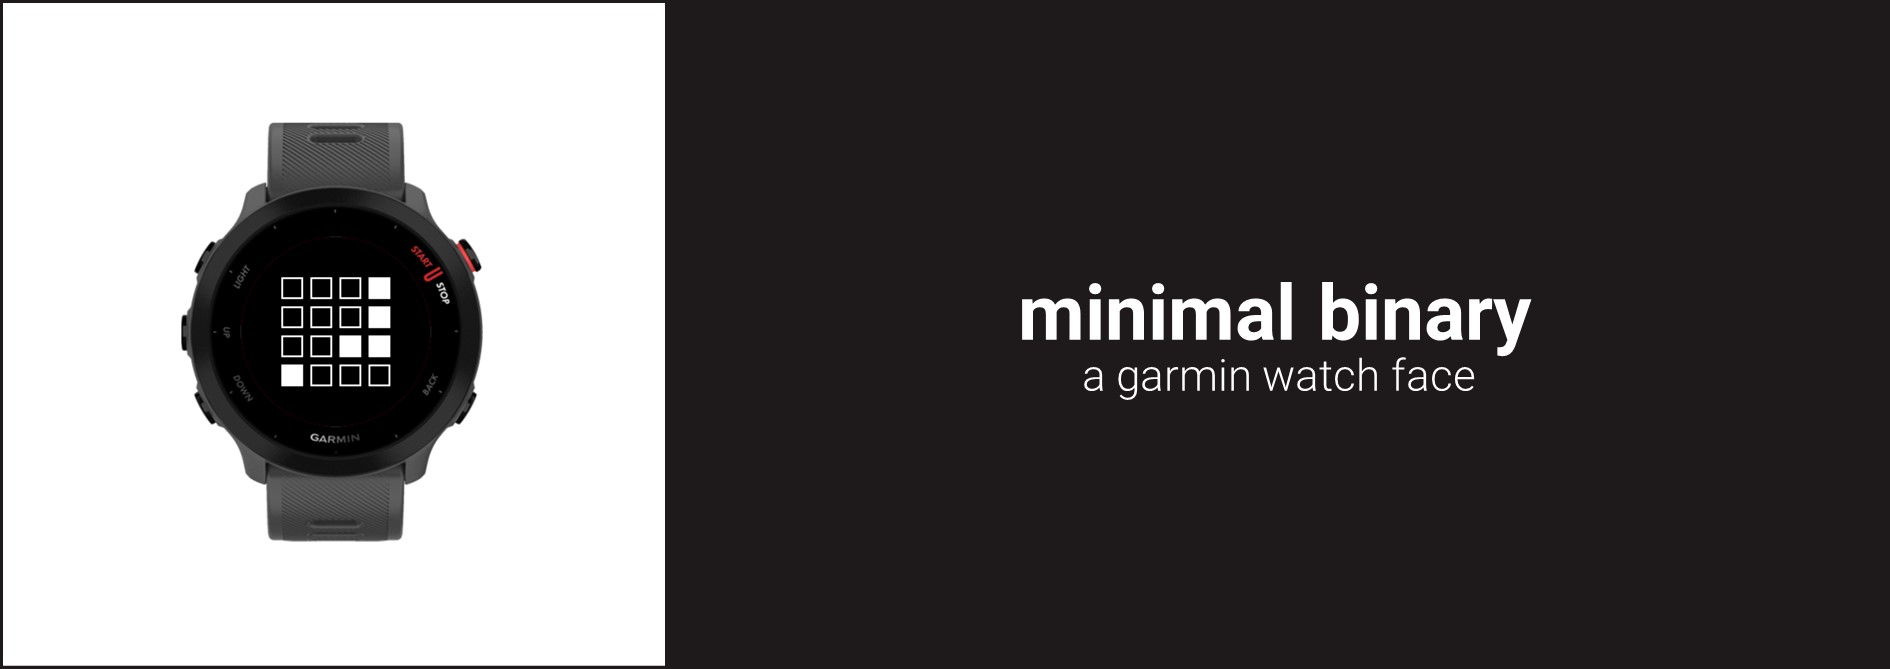 garmin sdk watchface design minimal binary